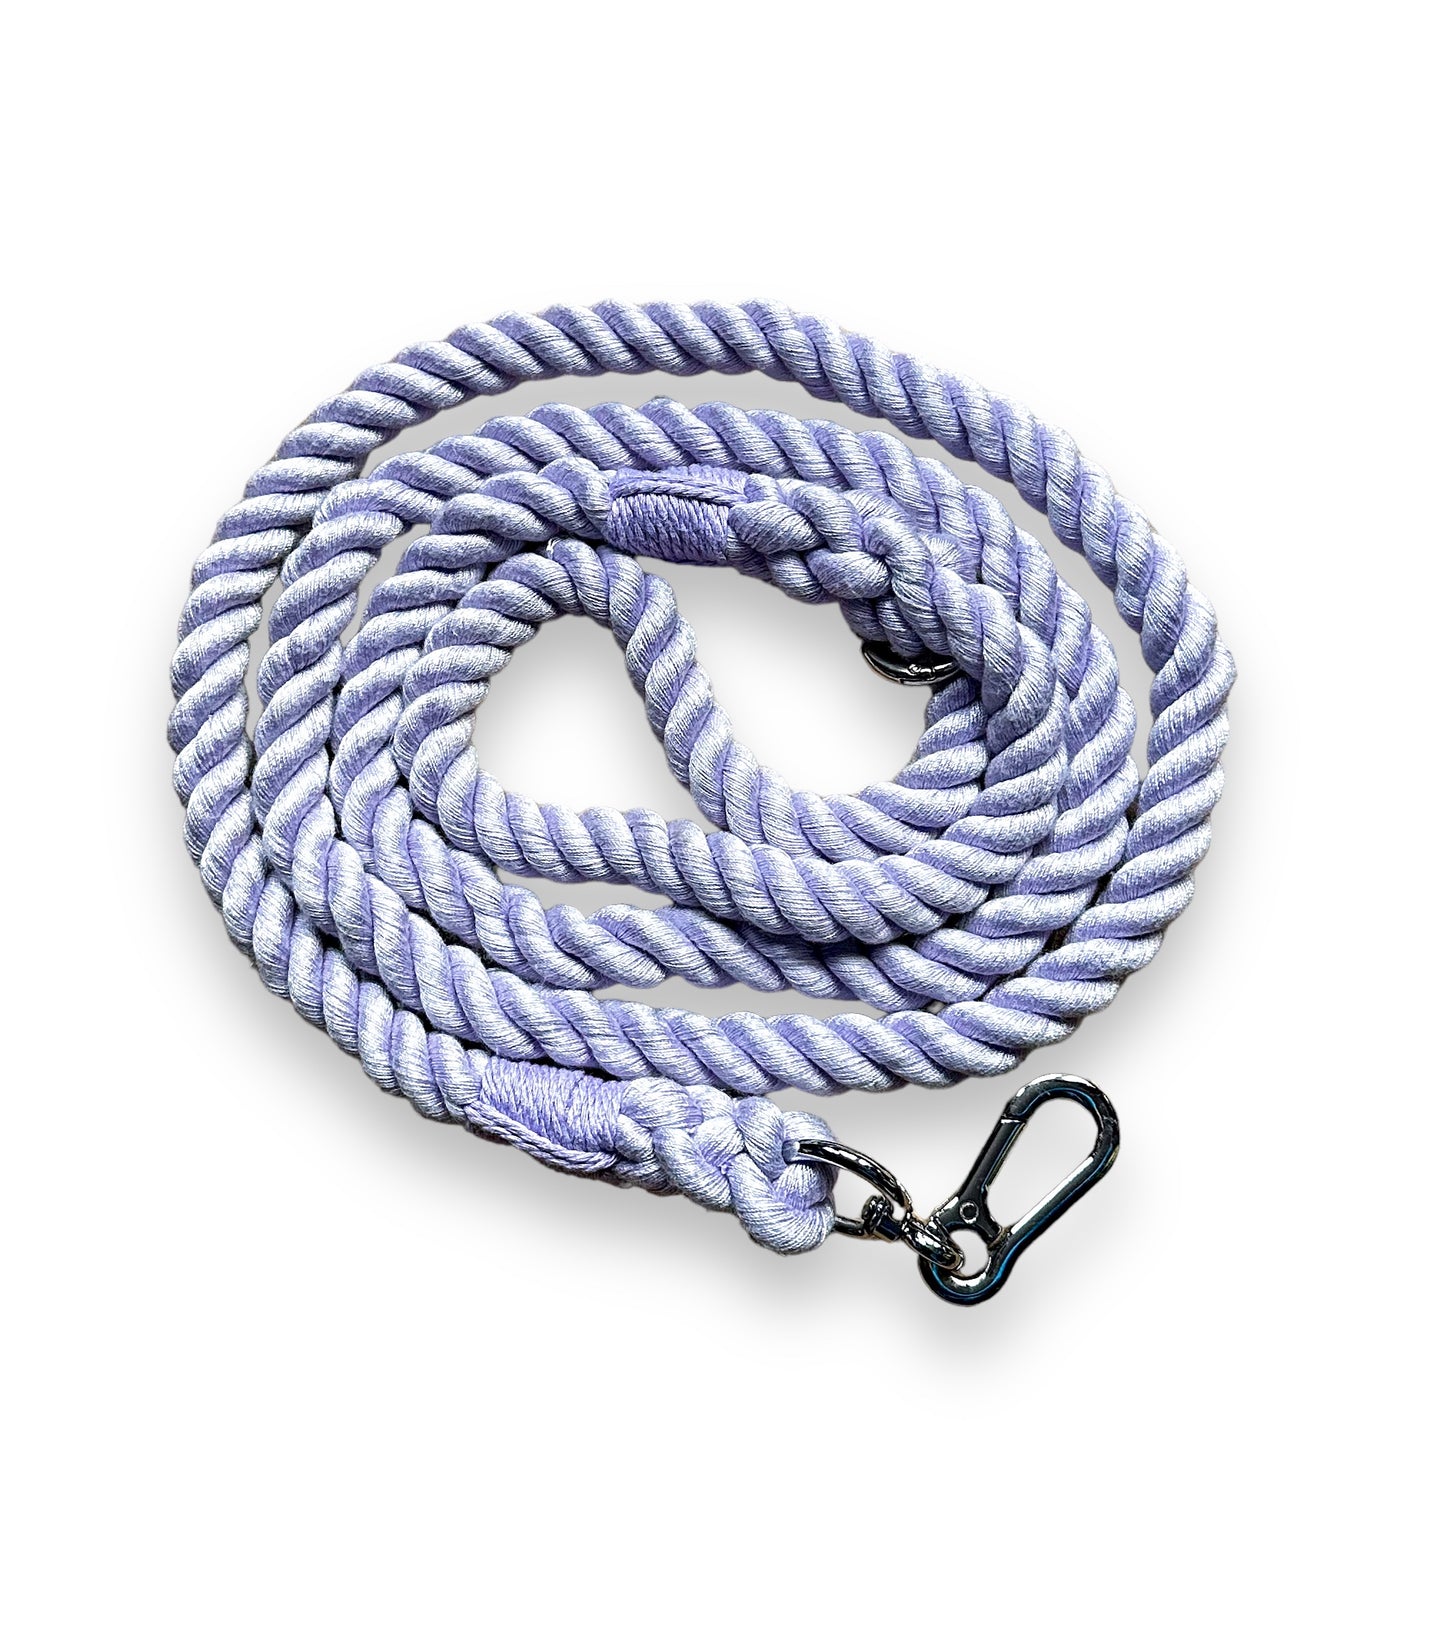 Rope lead - 5ft dog leash